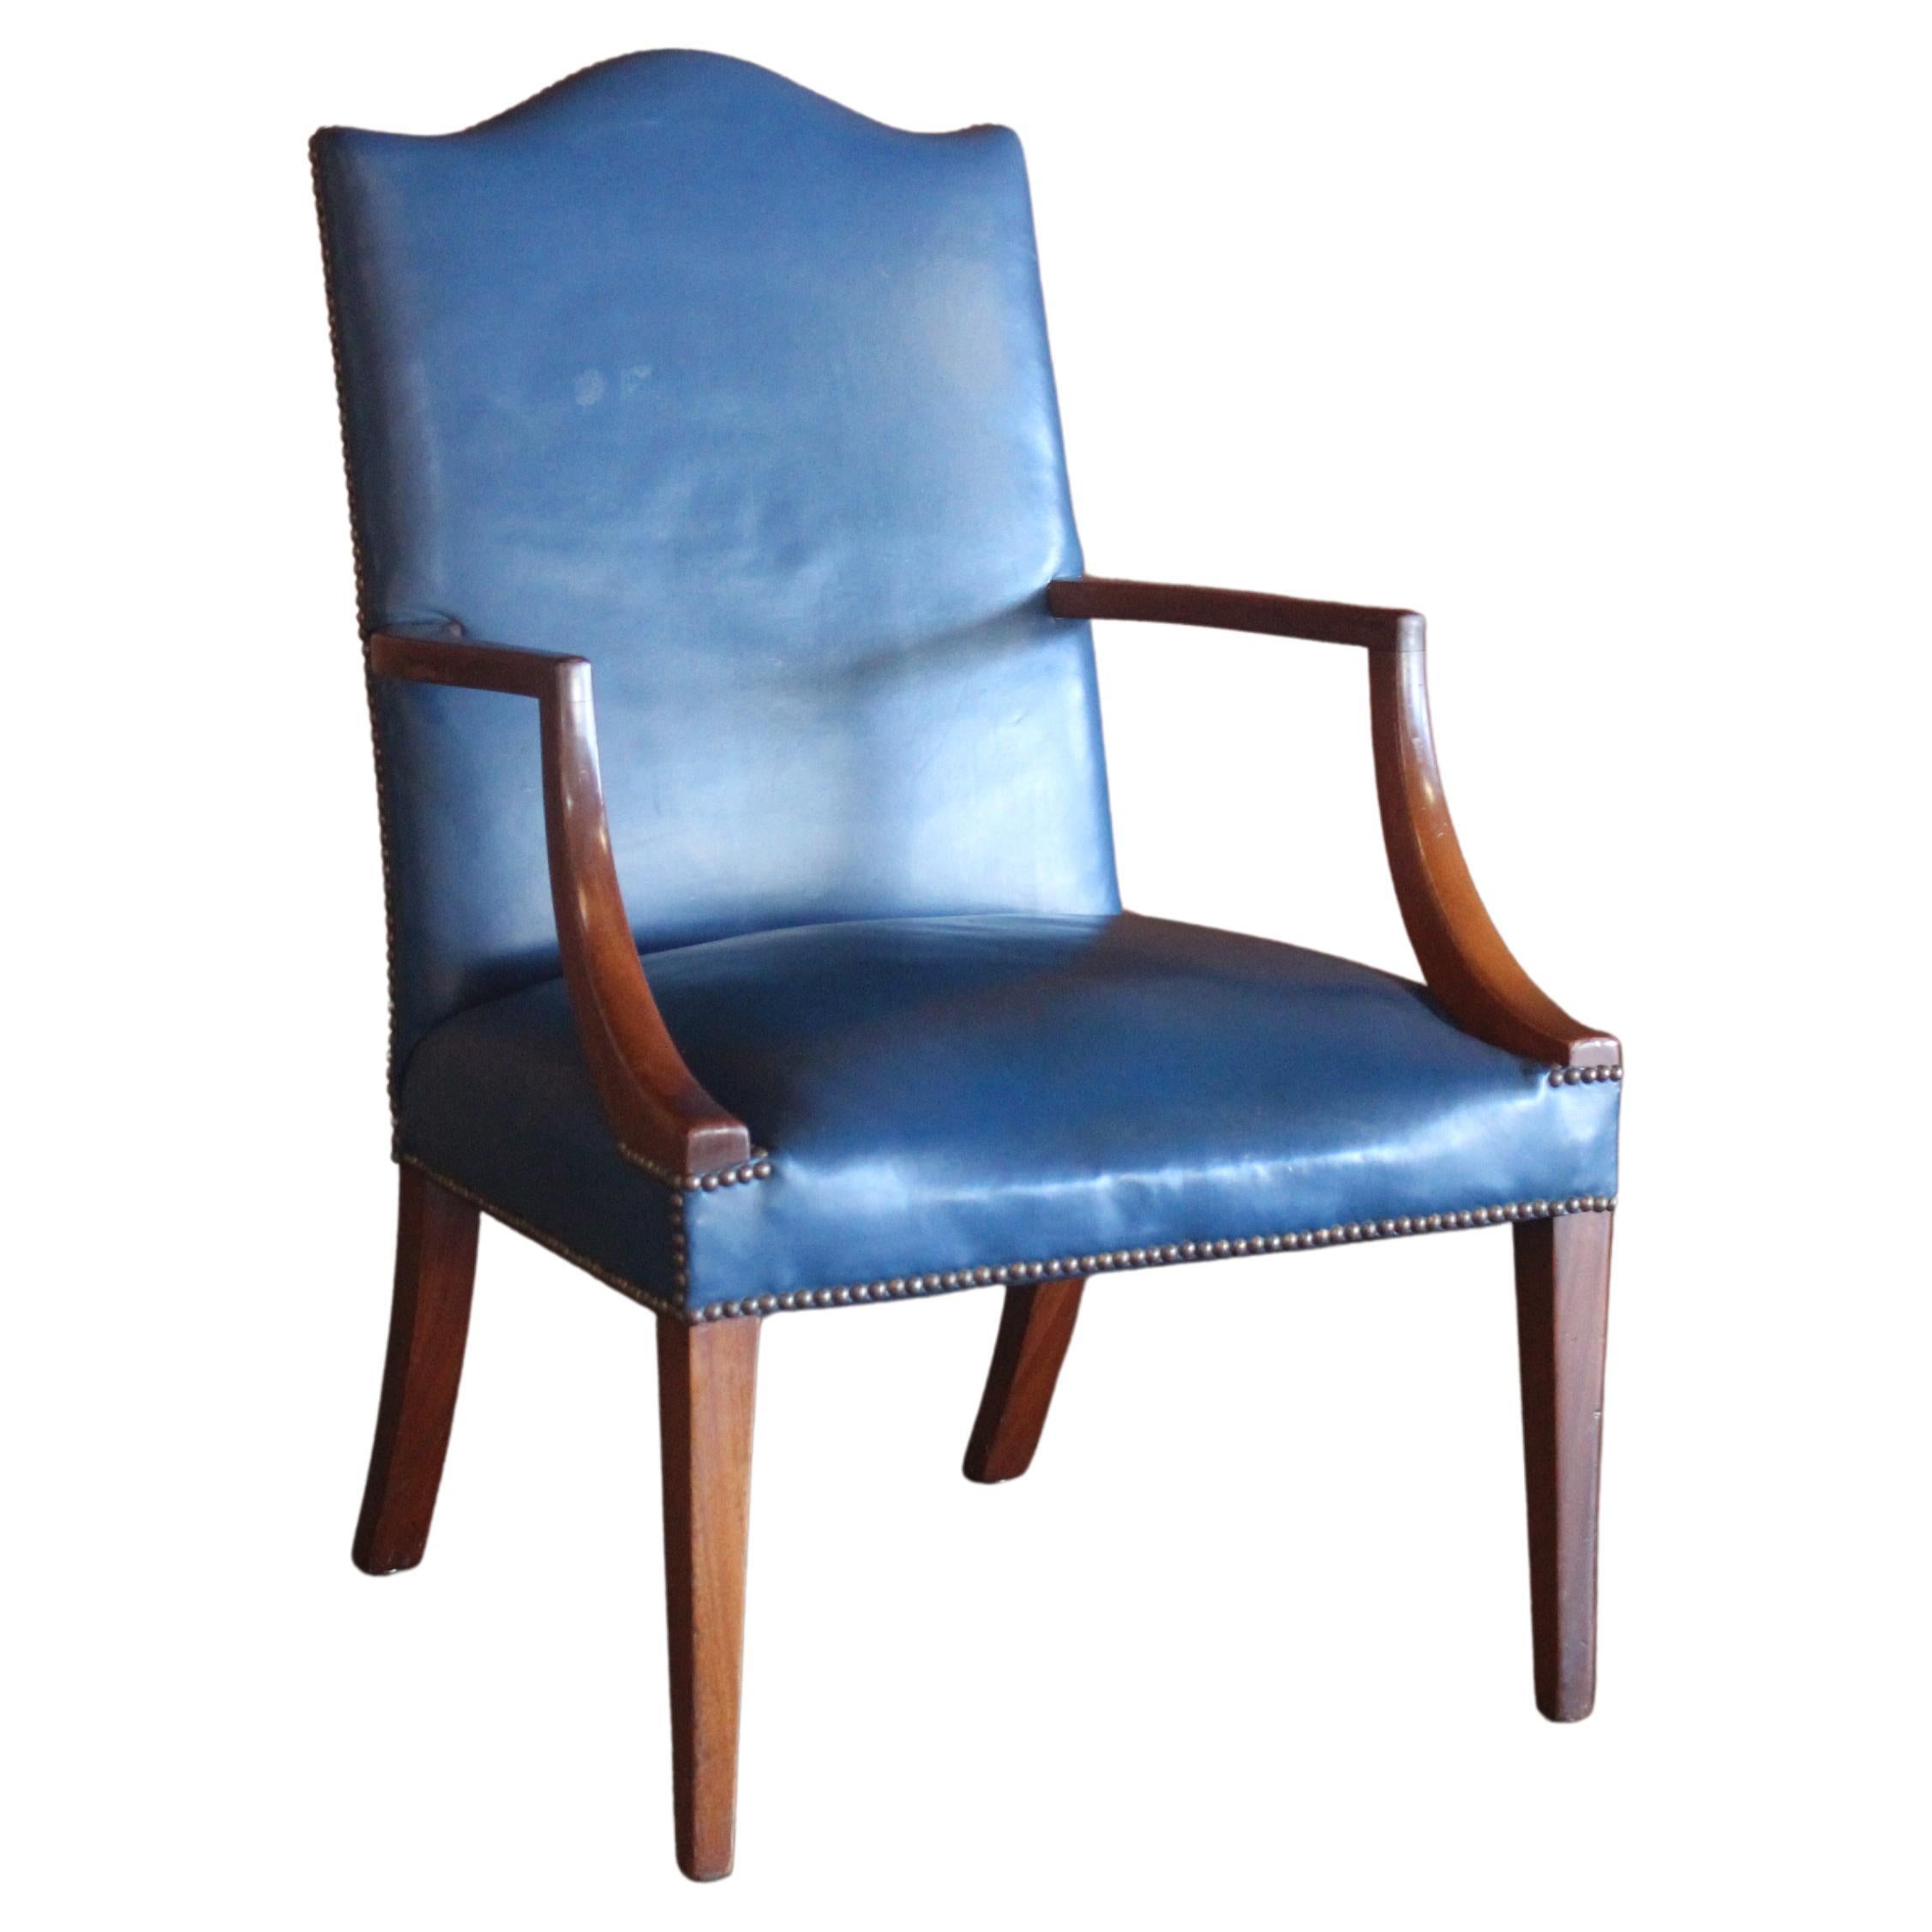 George II Stye Englischer Mahagoni-Sessel in original blauem Leder